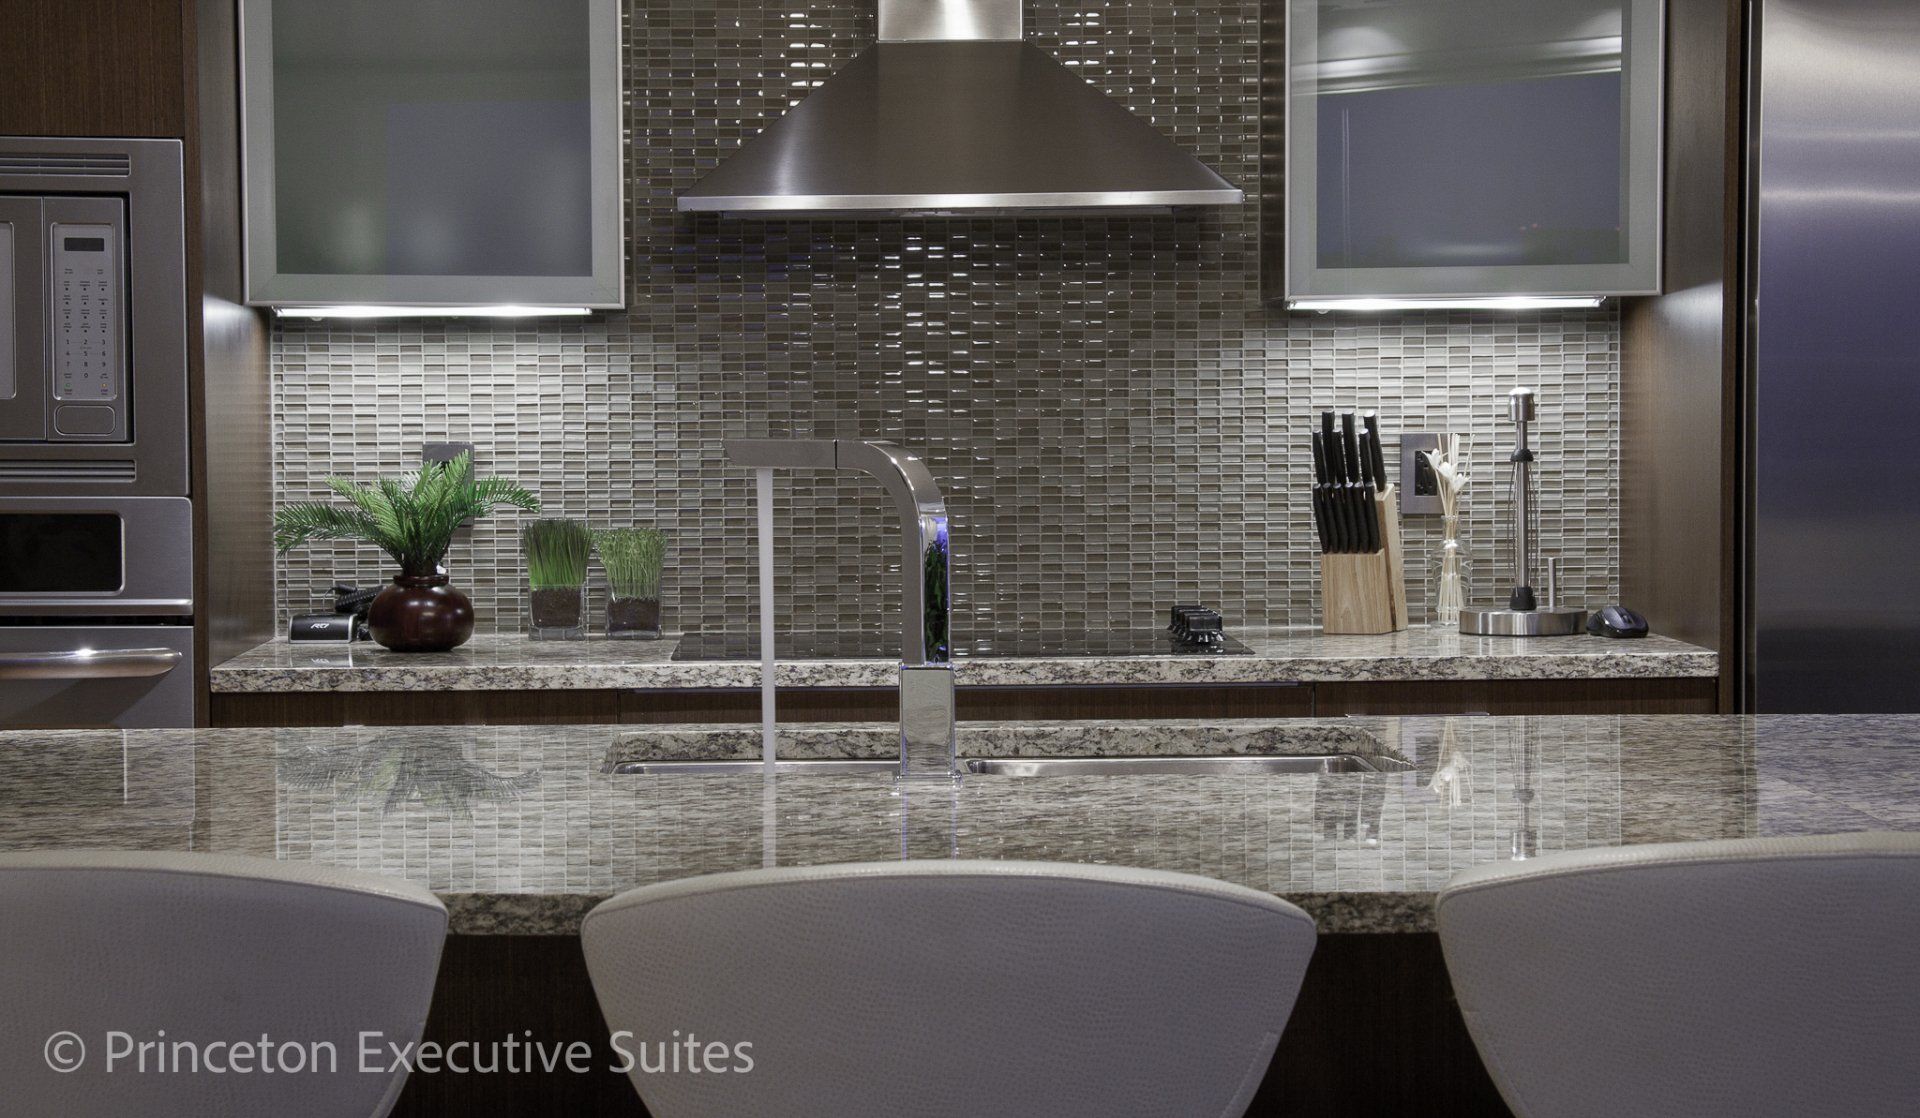 Granite counter top kitchen island in Edmonton luxury furnished suite